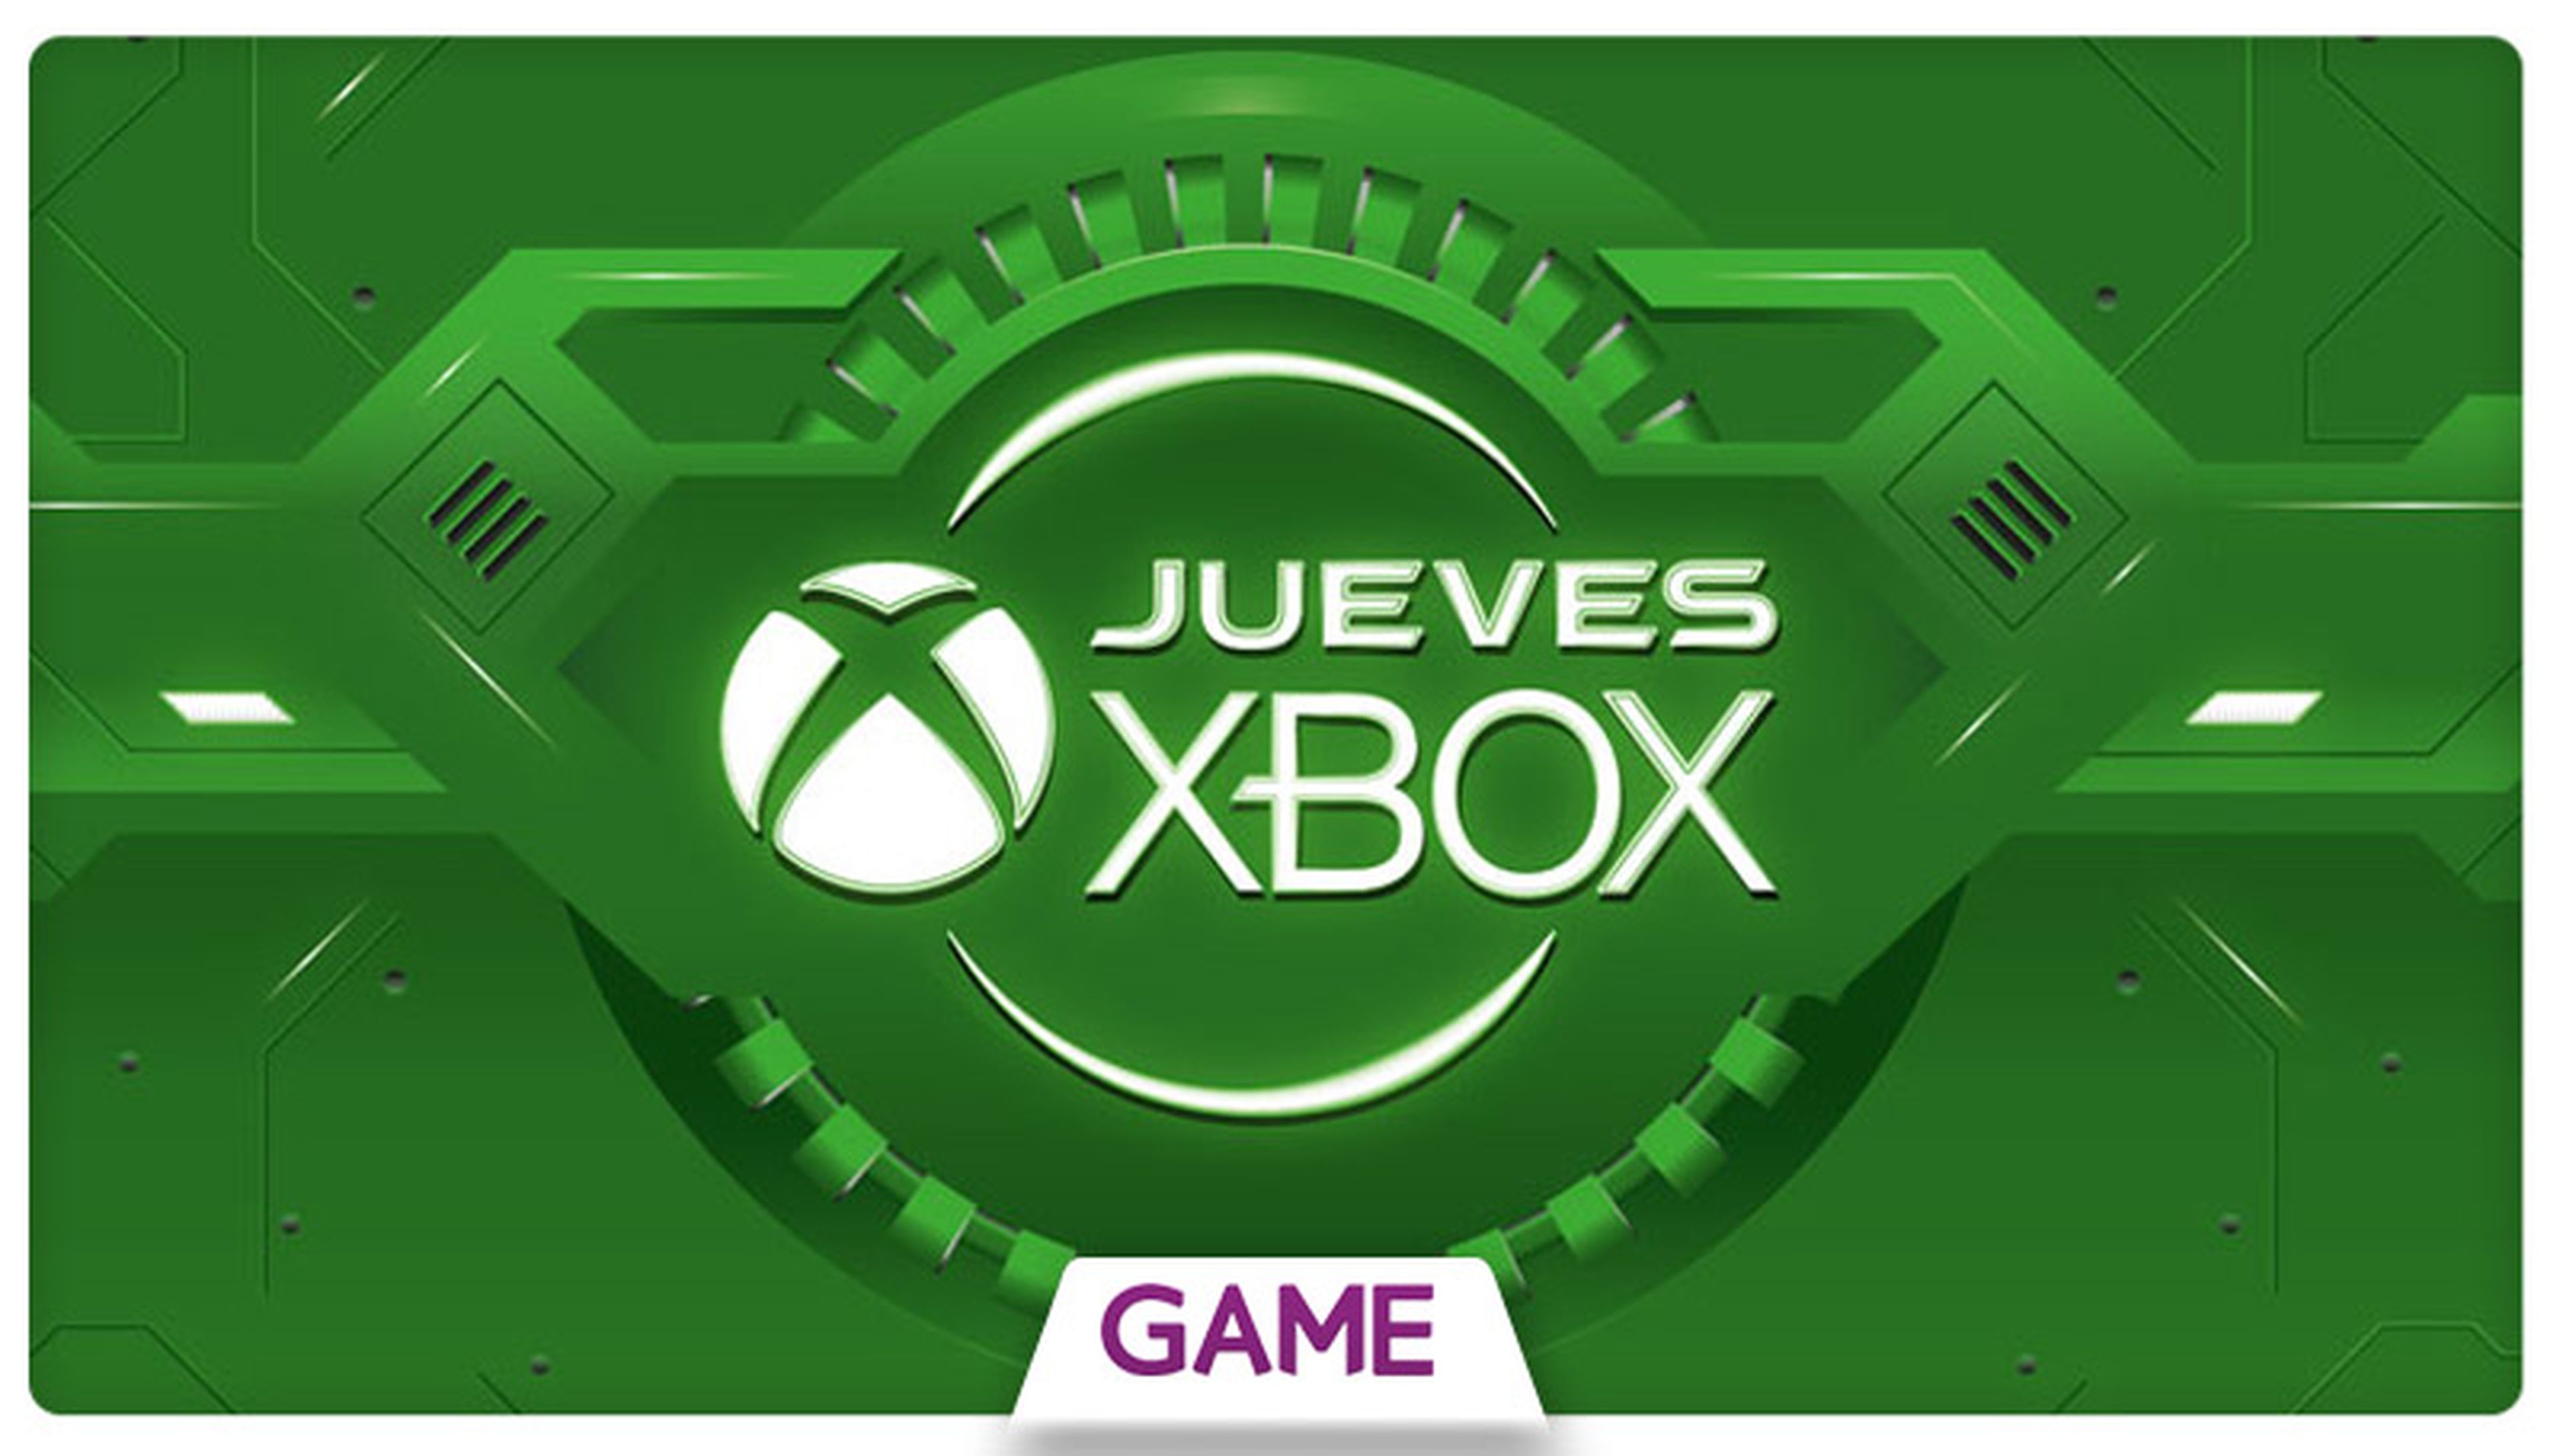 Jueves Xbox en GAME: Decimoquinta semana de ofertas